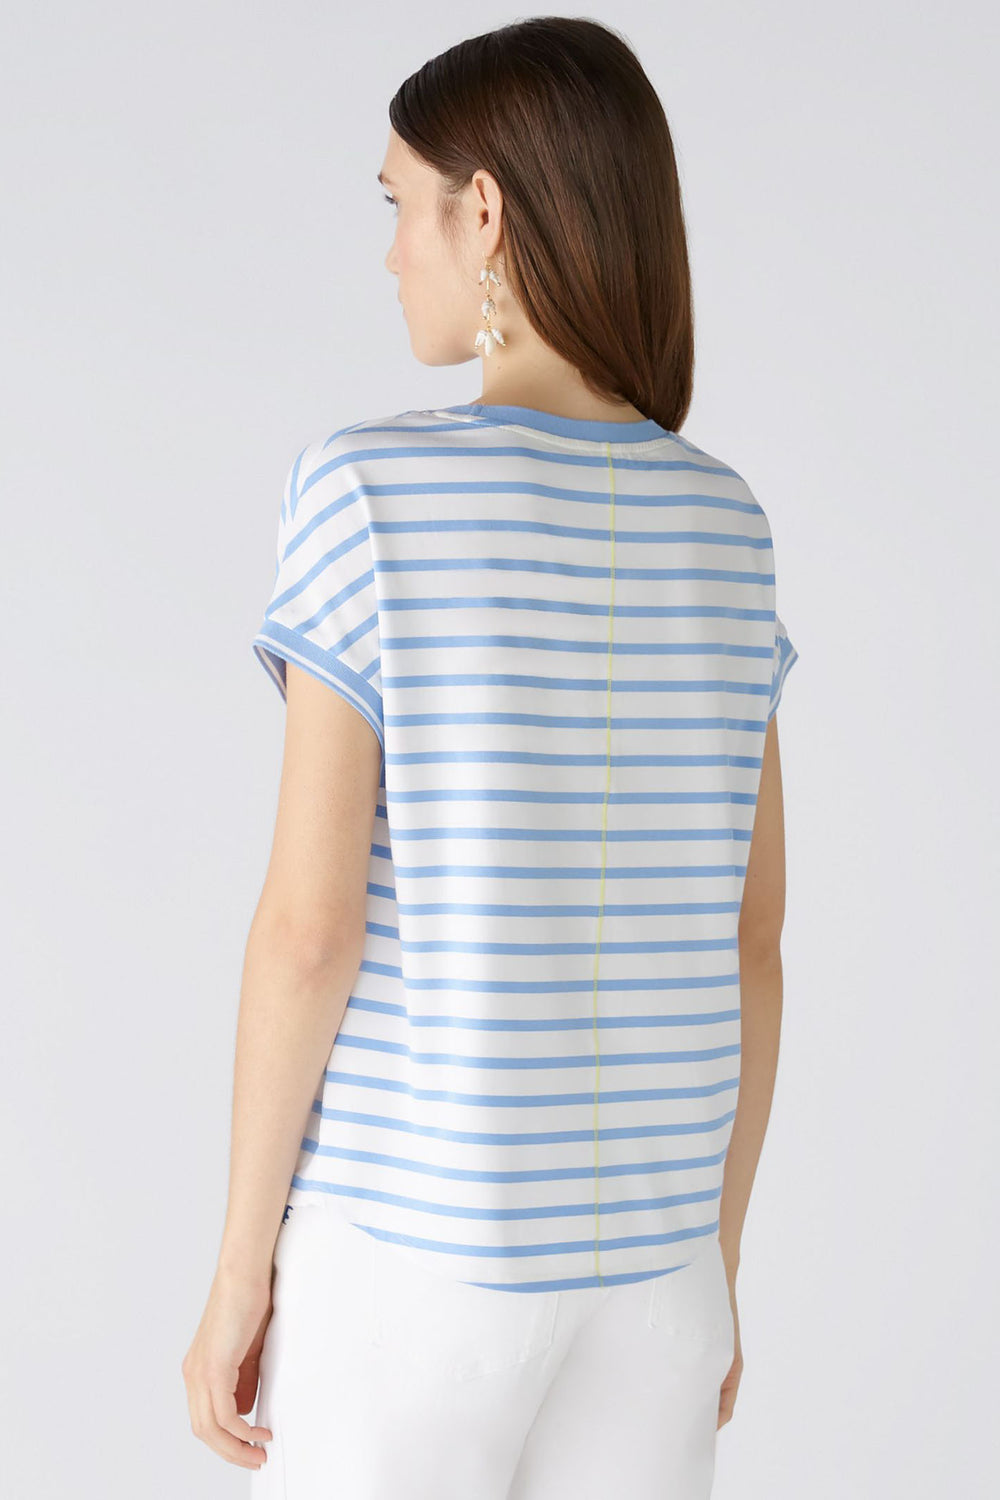 Oui 87504 Blue Offwhite Stripe Summer Roadtrip Print Top - Olivia Grace Fashion